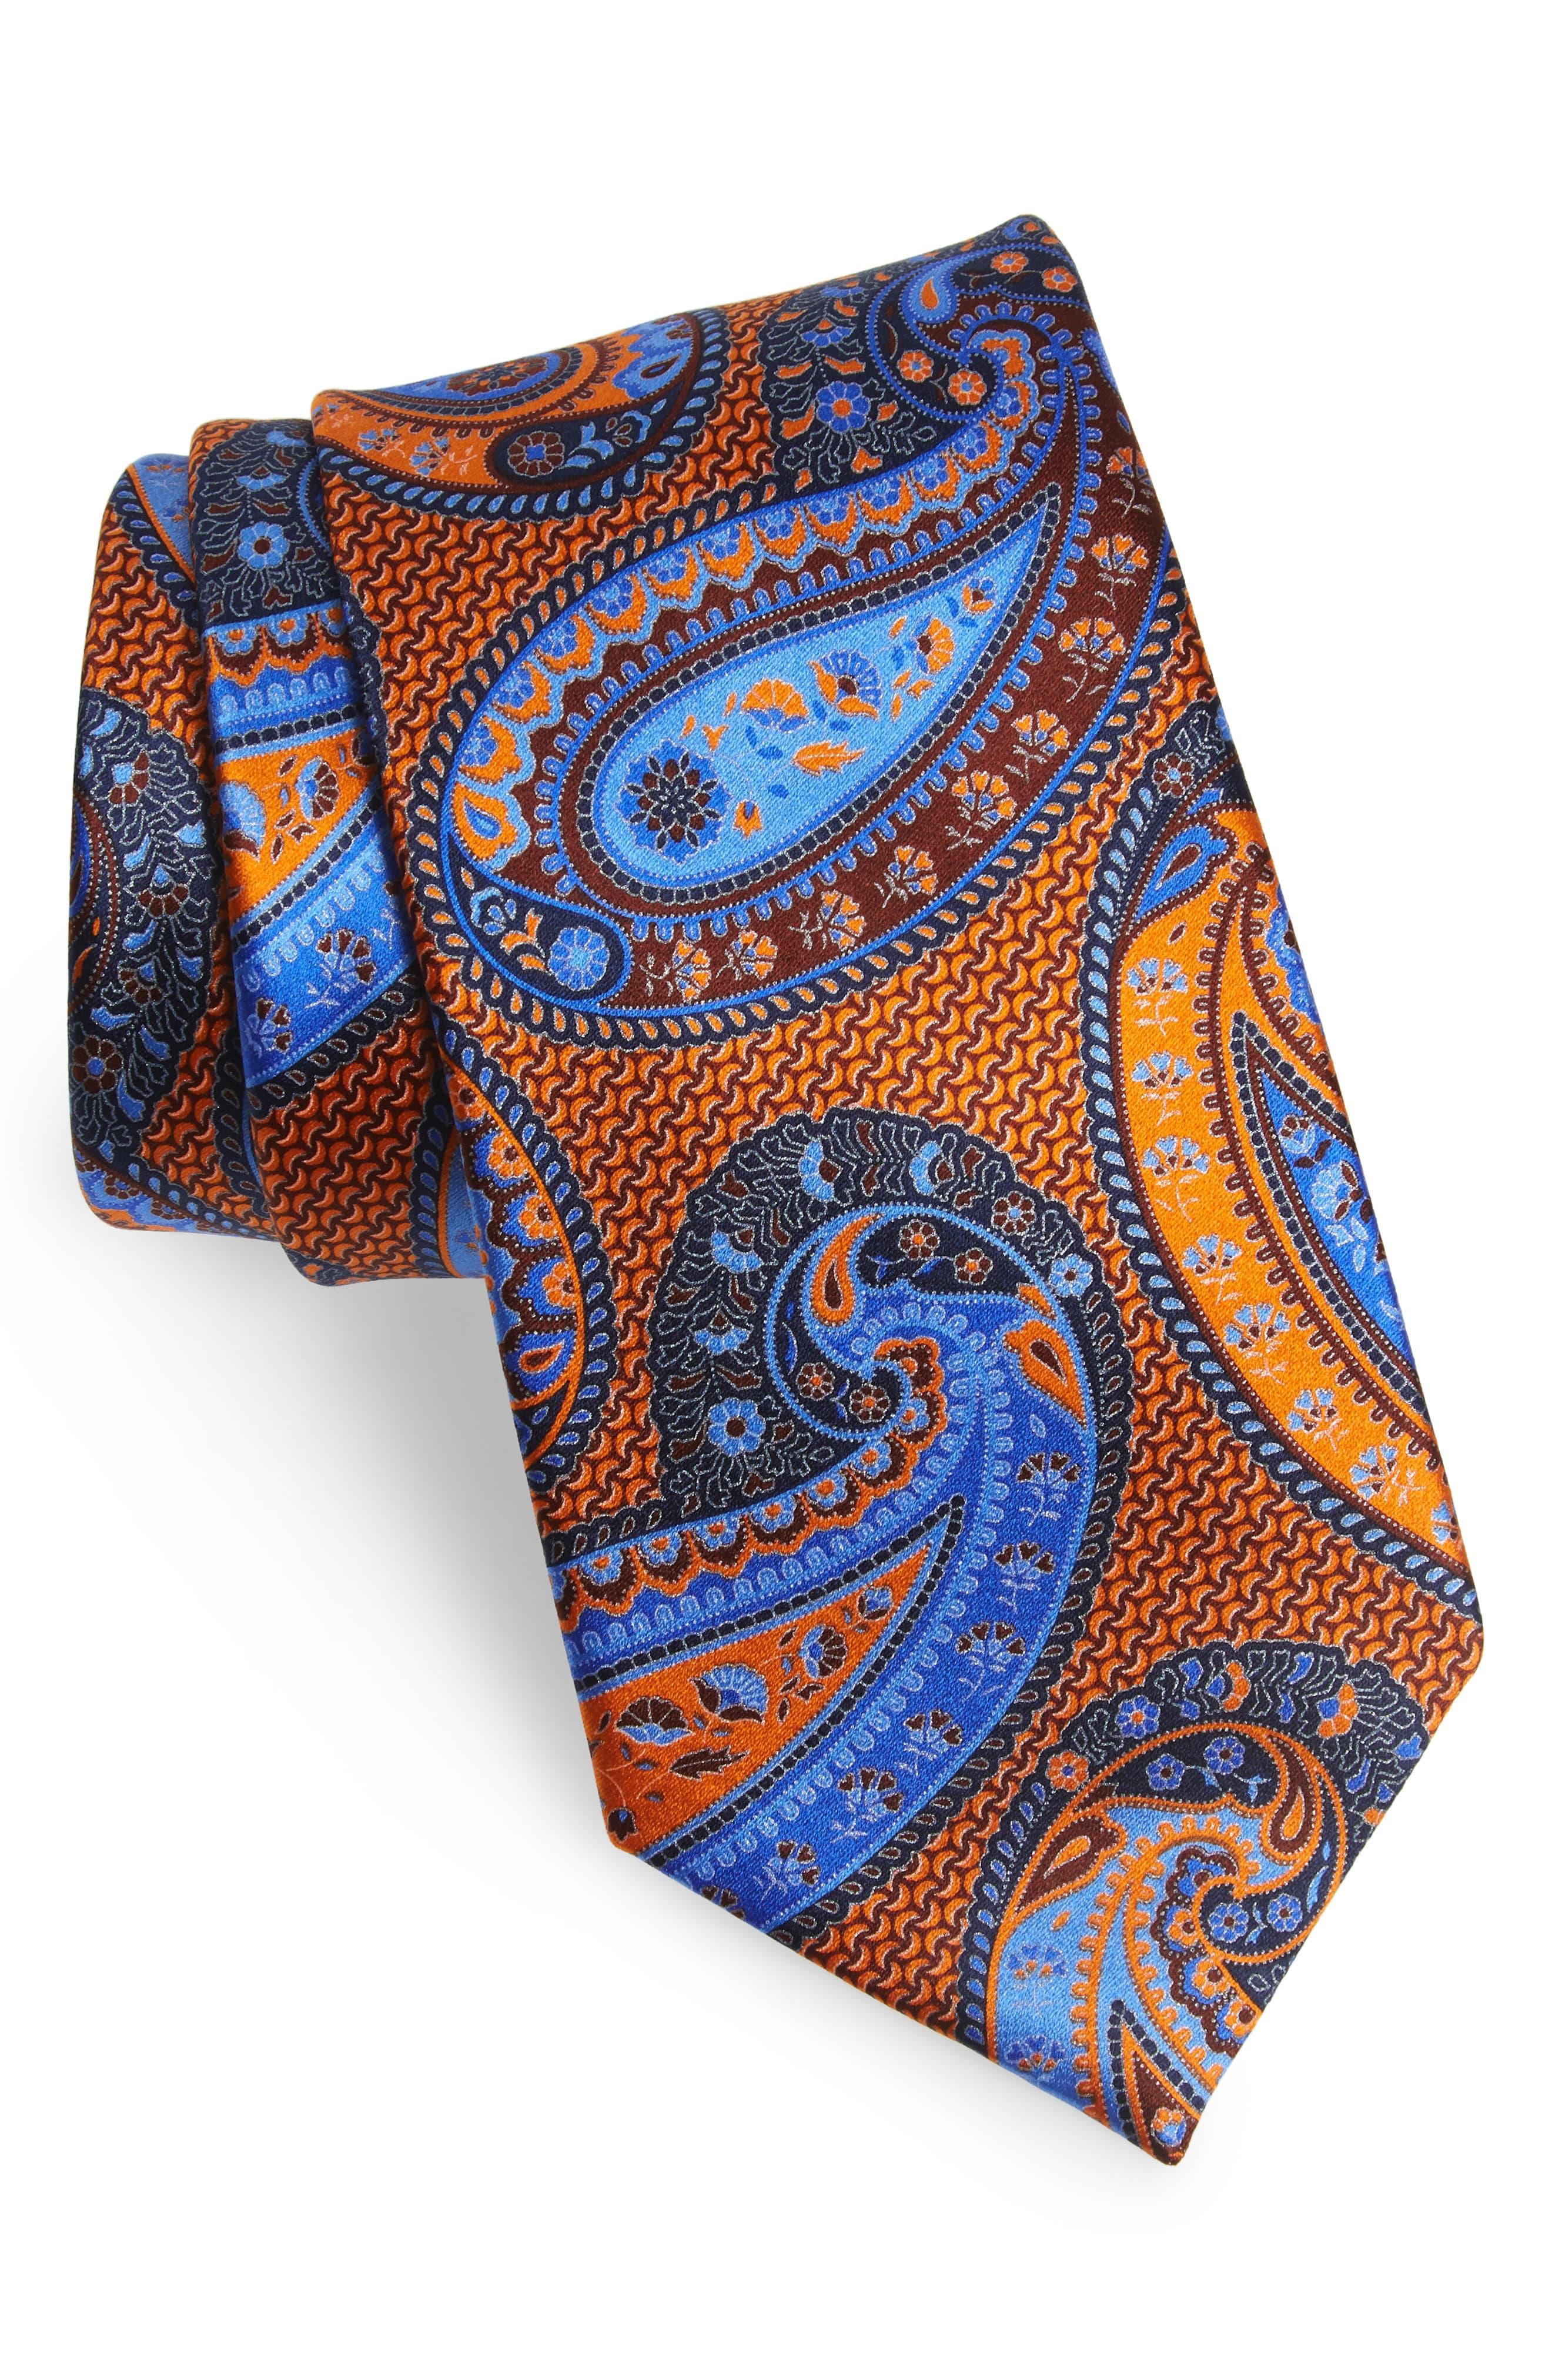 Ermenegildo Zegna Paisley Silk Tie in Blue for Men - Lyst